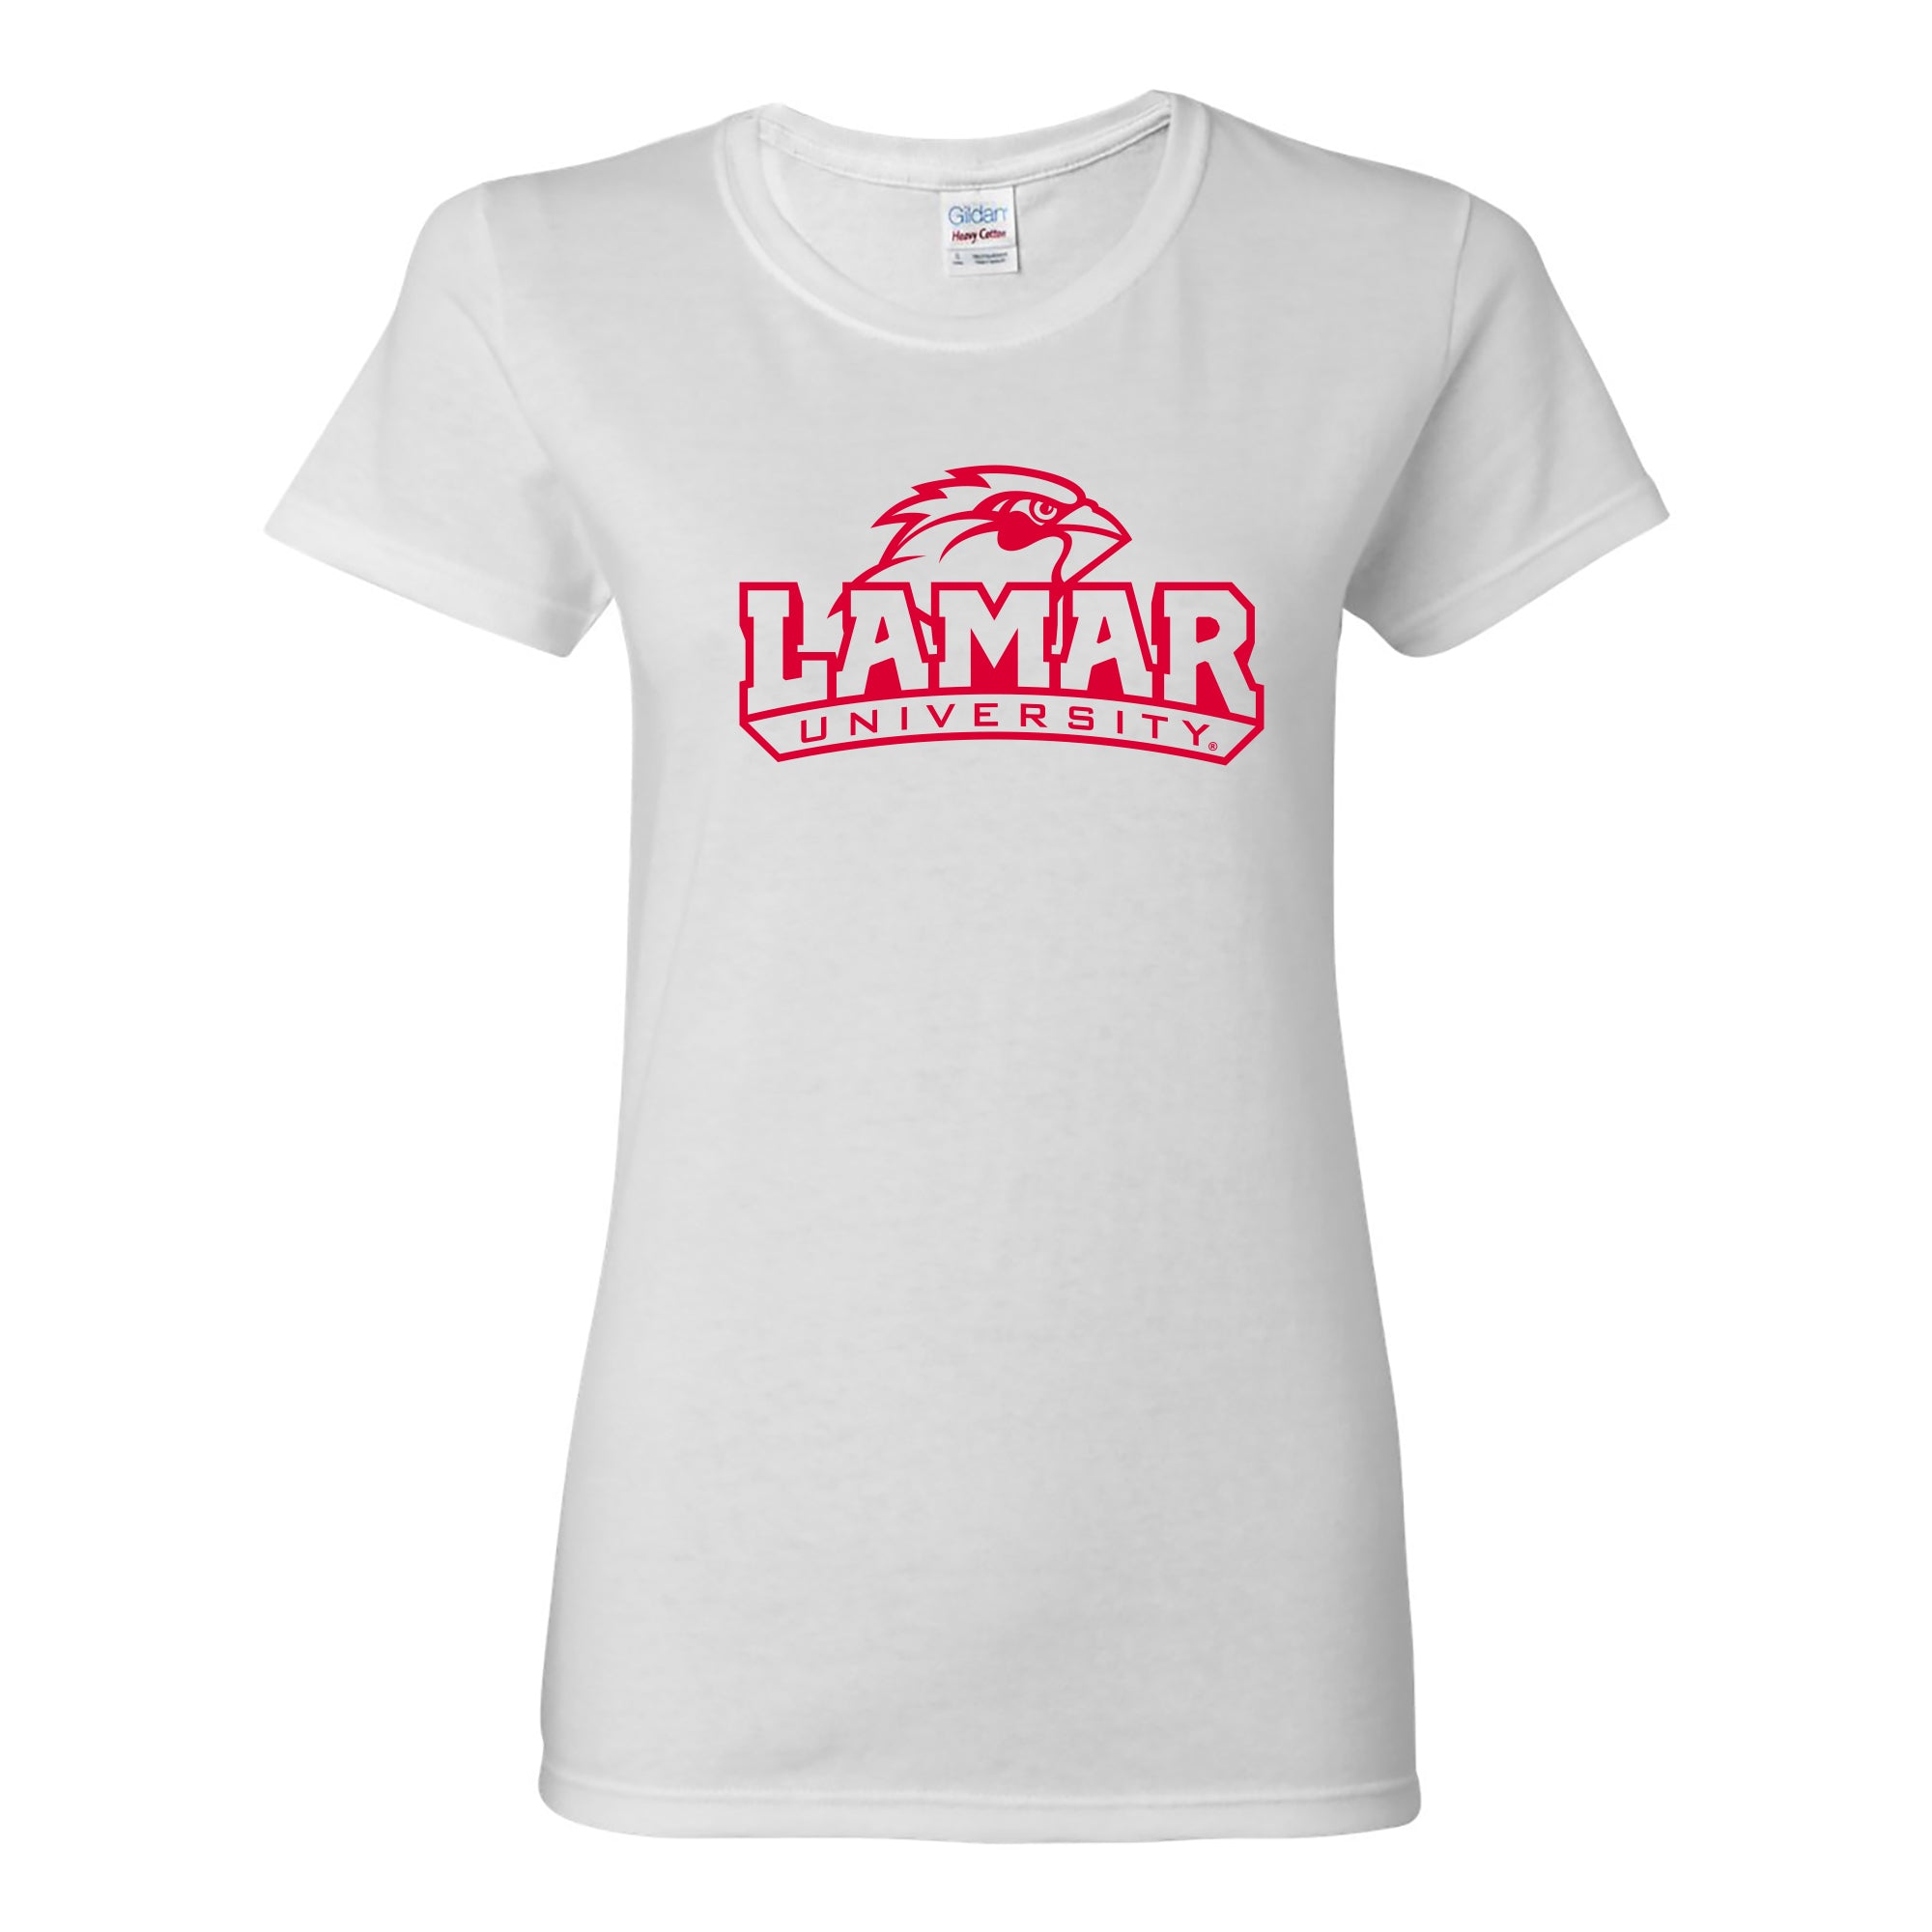 League-Legacy Women's Louisville Cardinals Sand Intramural Midi T-Shirt